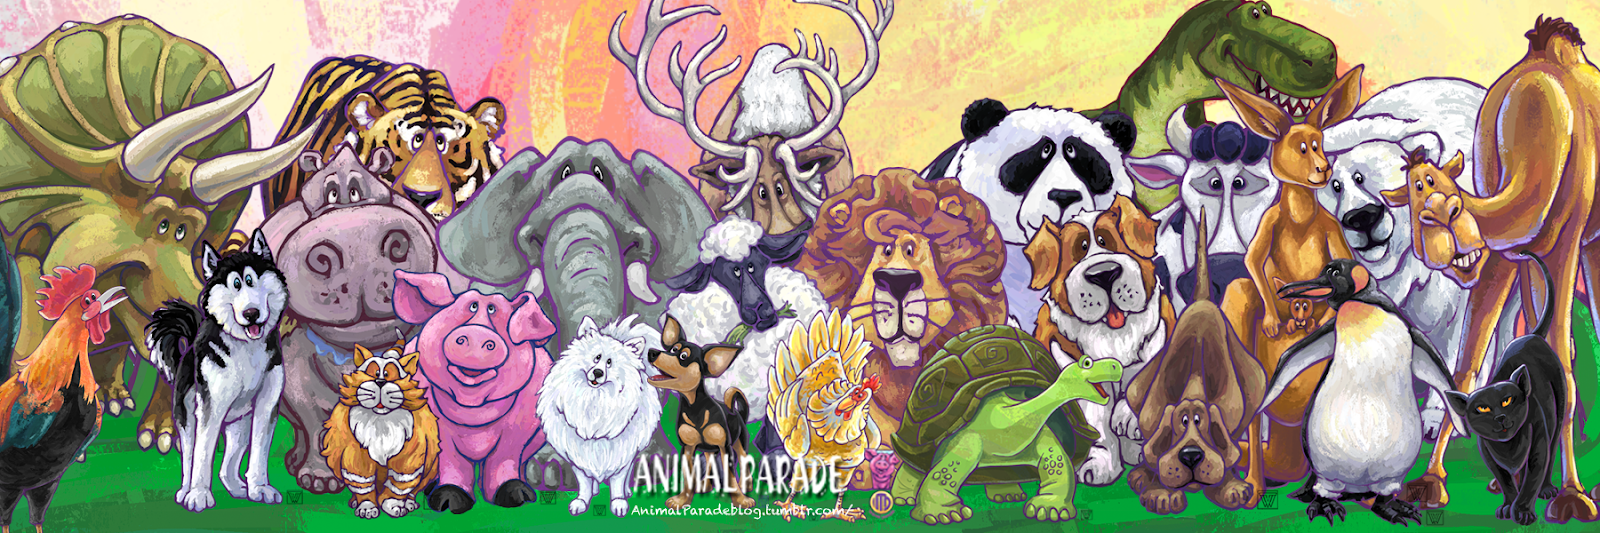 Animal Parade World